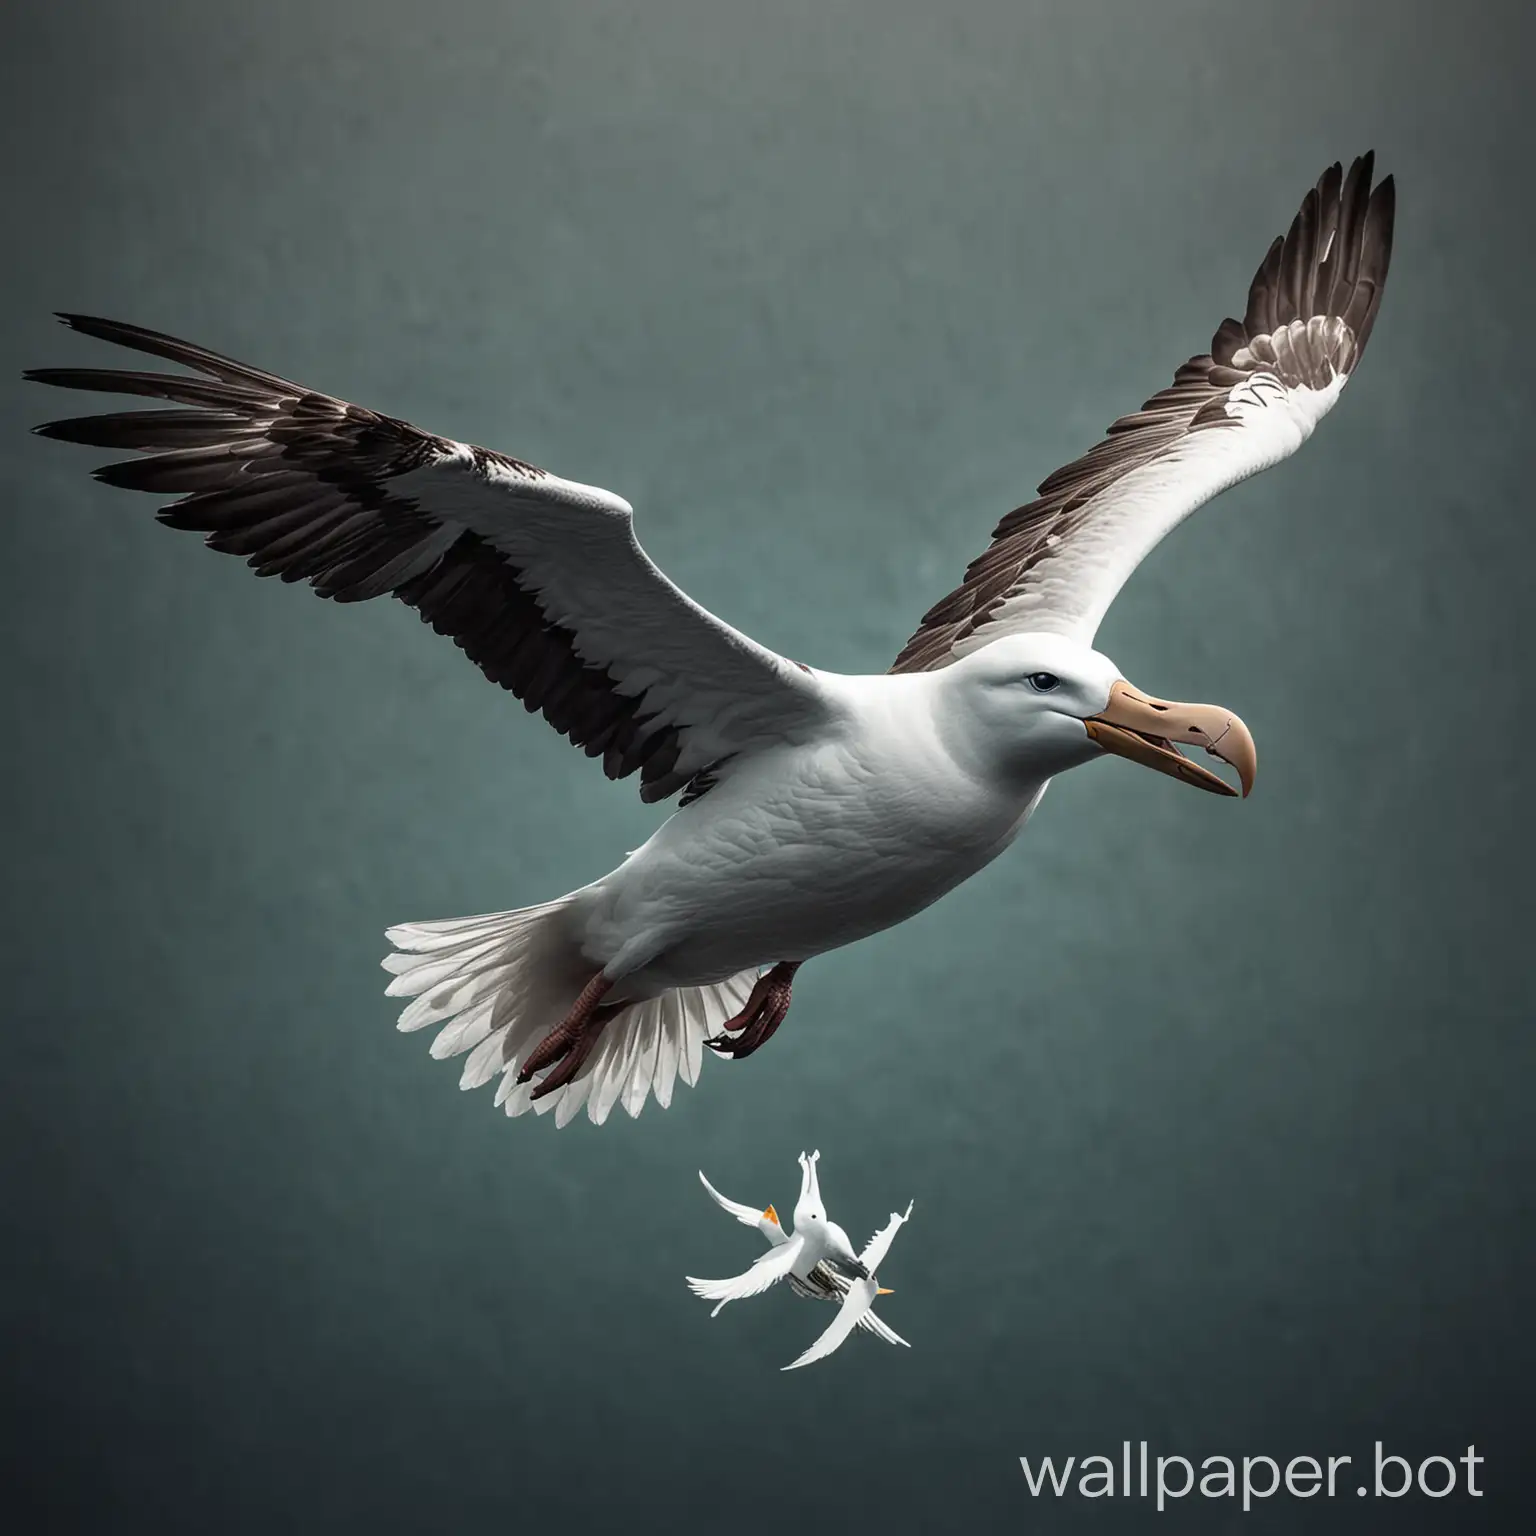 Majestic-Albatross-in-Flight-Symbol-of-Freedom-and-Strength